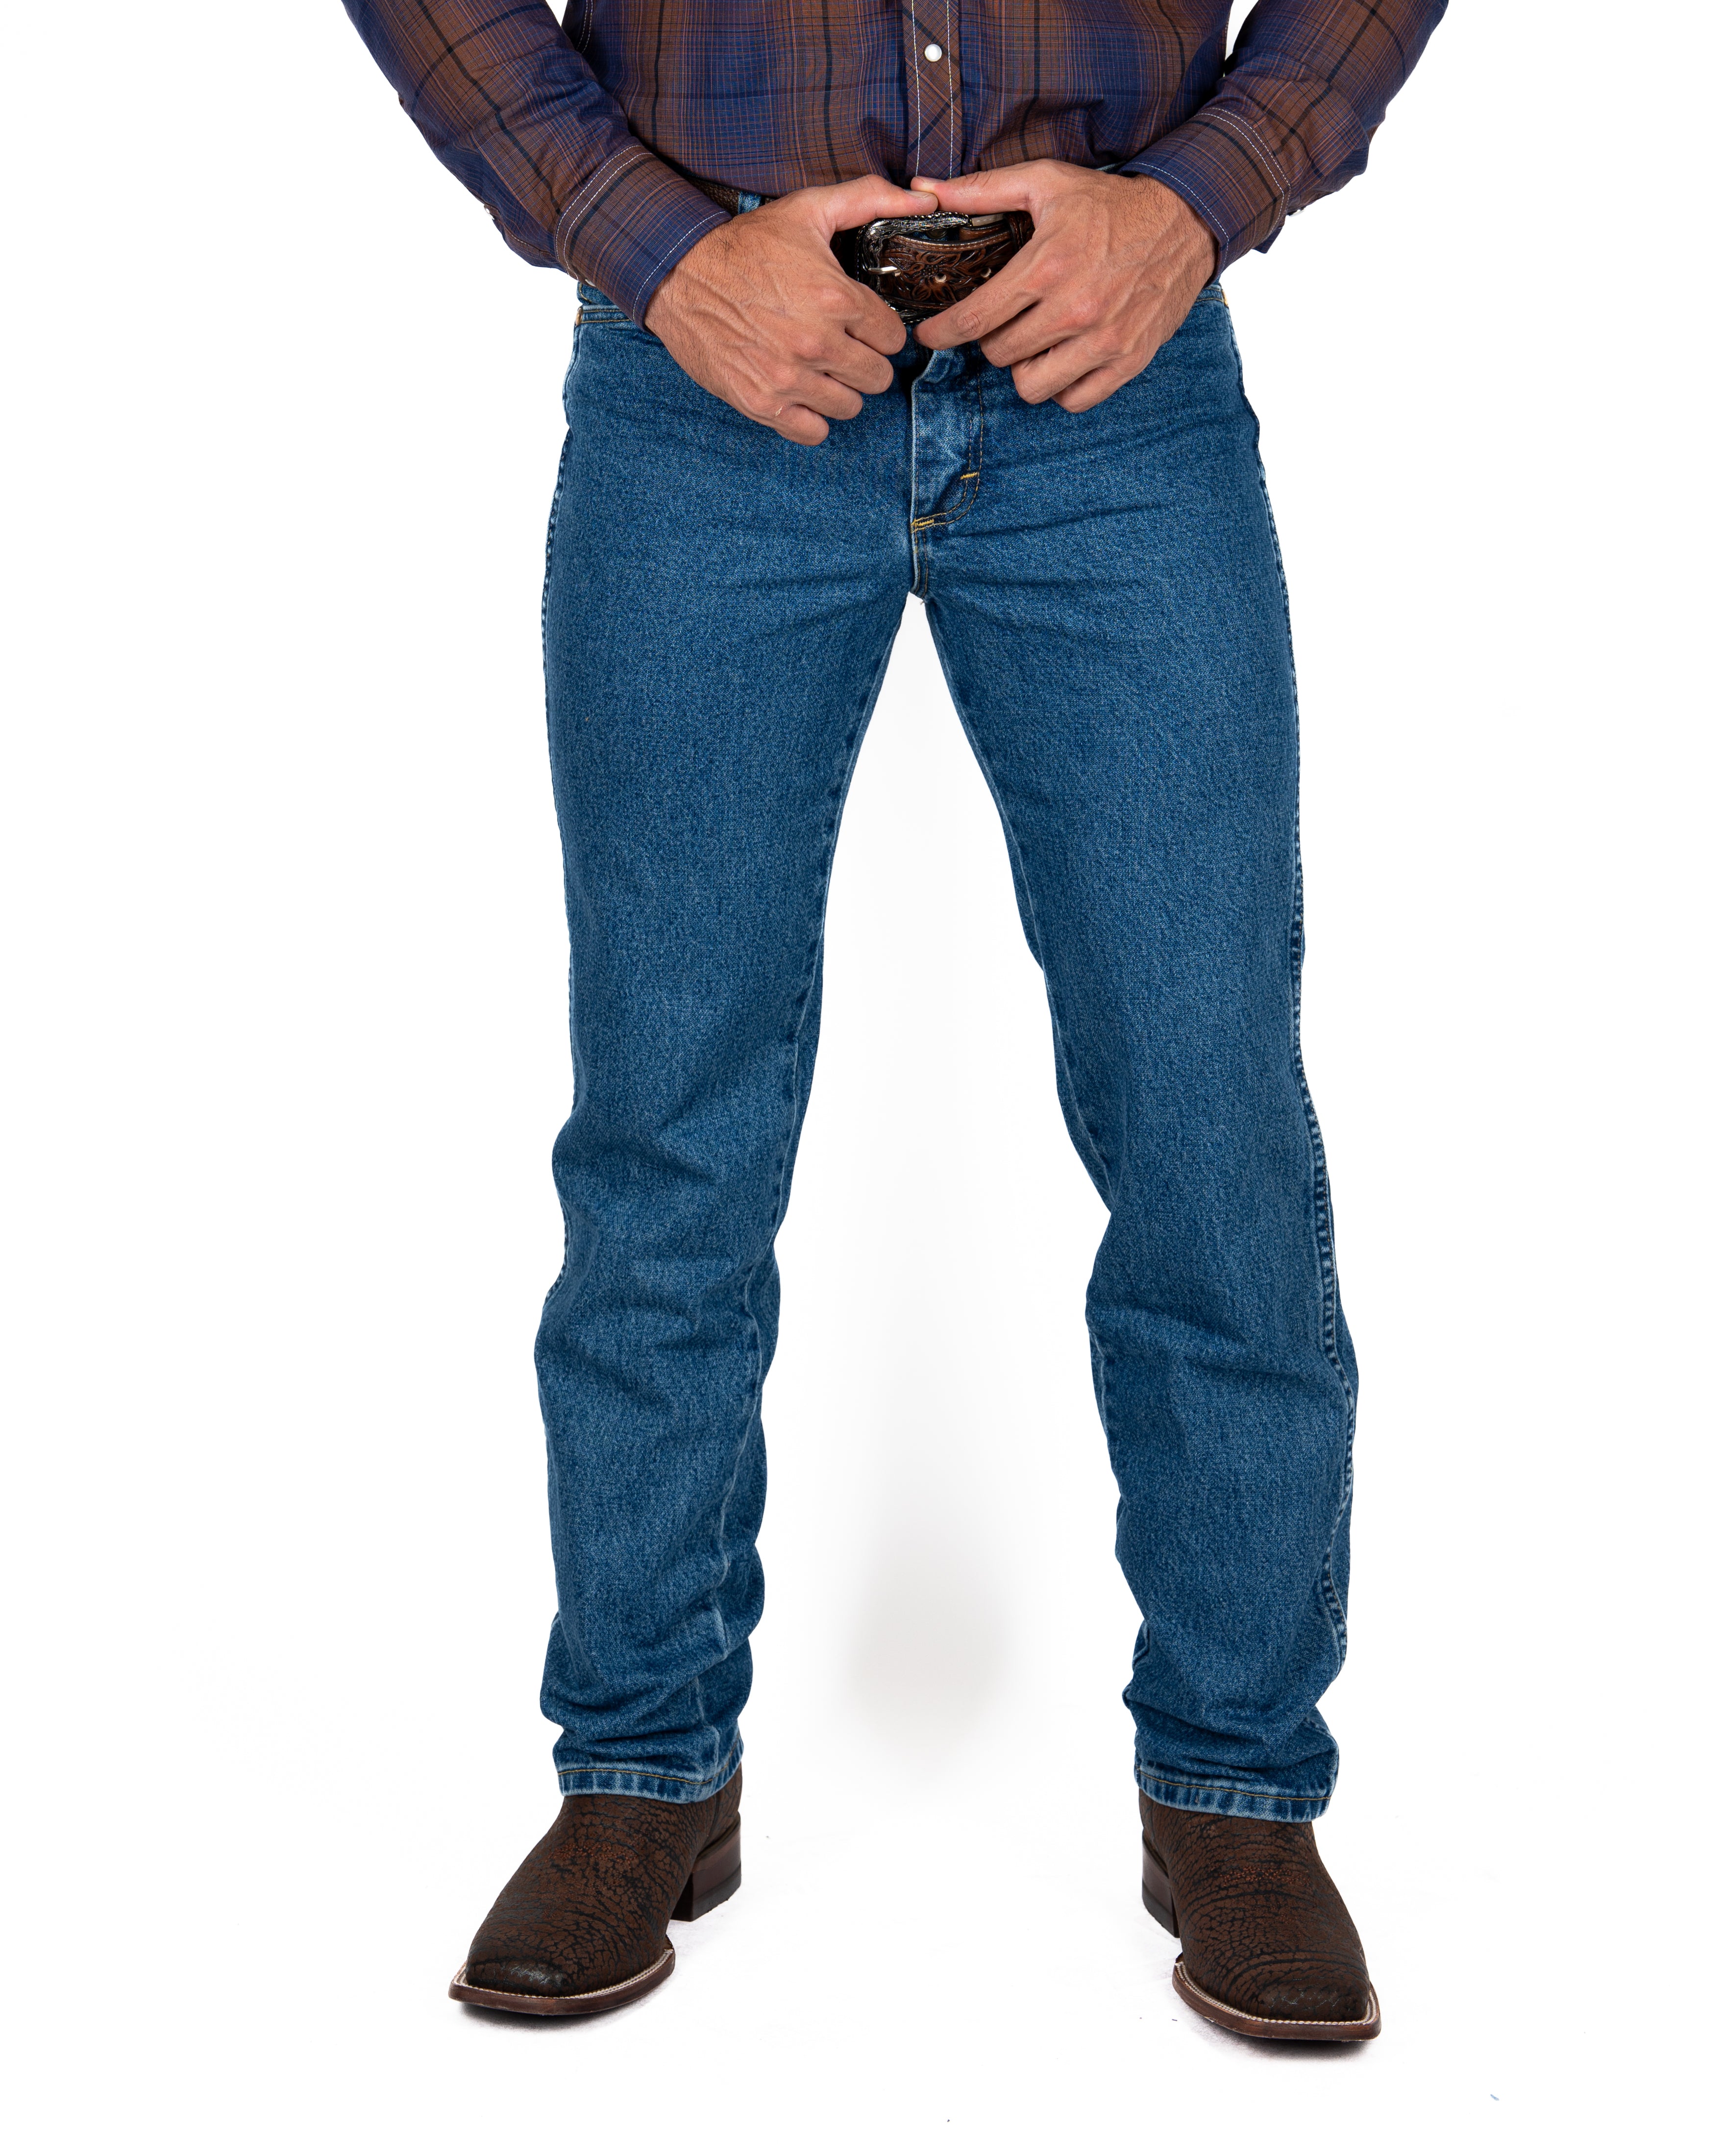 Jeans Wrangler George Strait Slim Fit Caballero